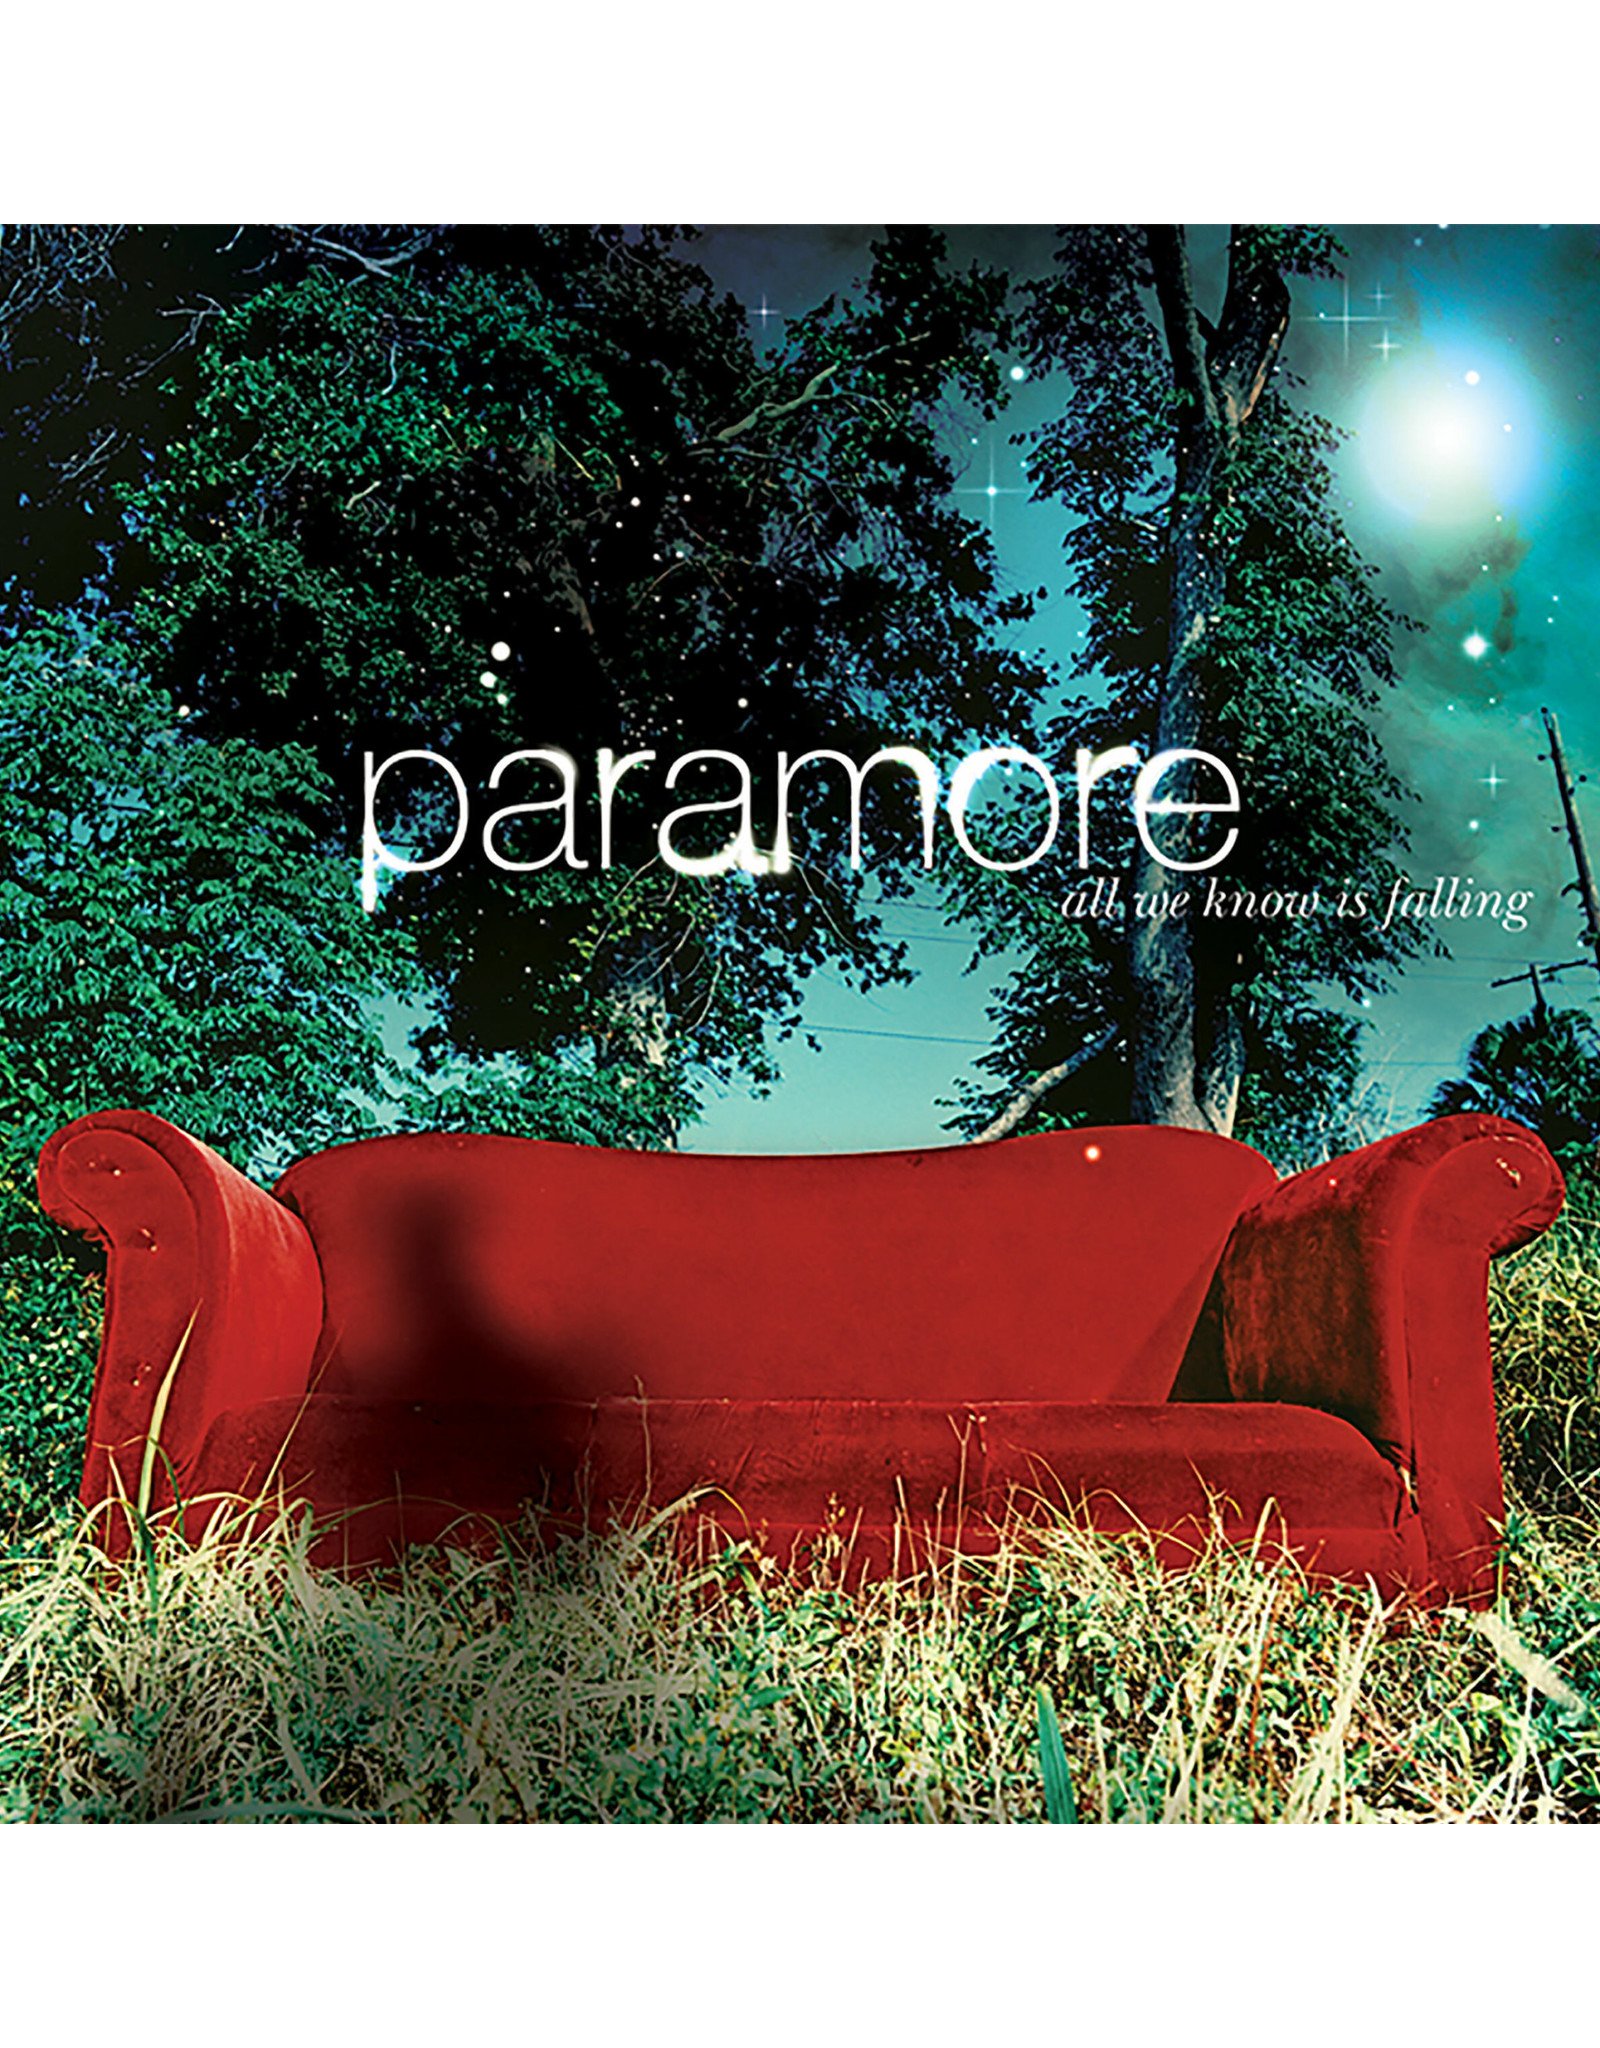 Paramore - Riot! (2007) Album Cover  Paramore, Album cover design, Album  covers